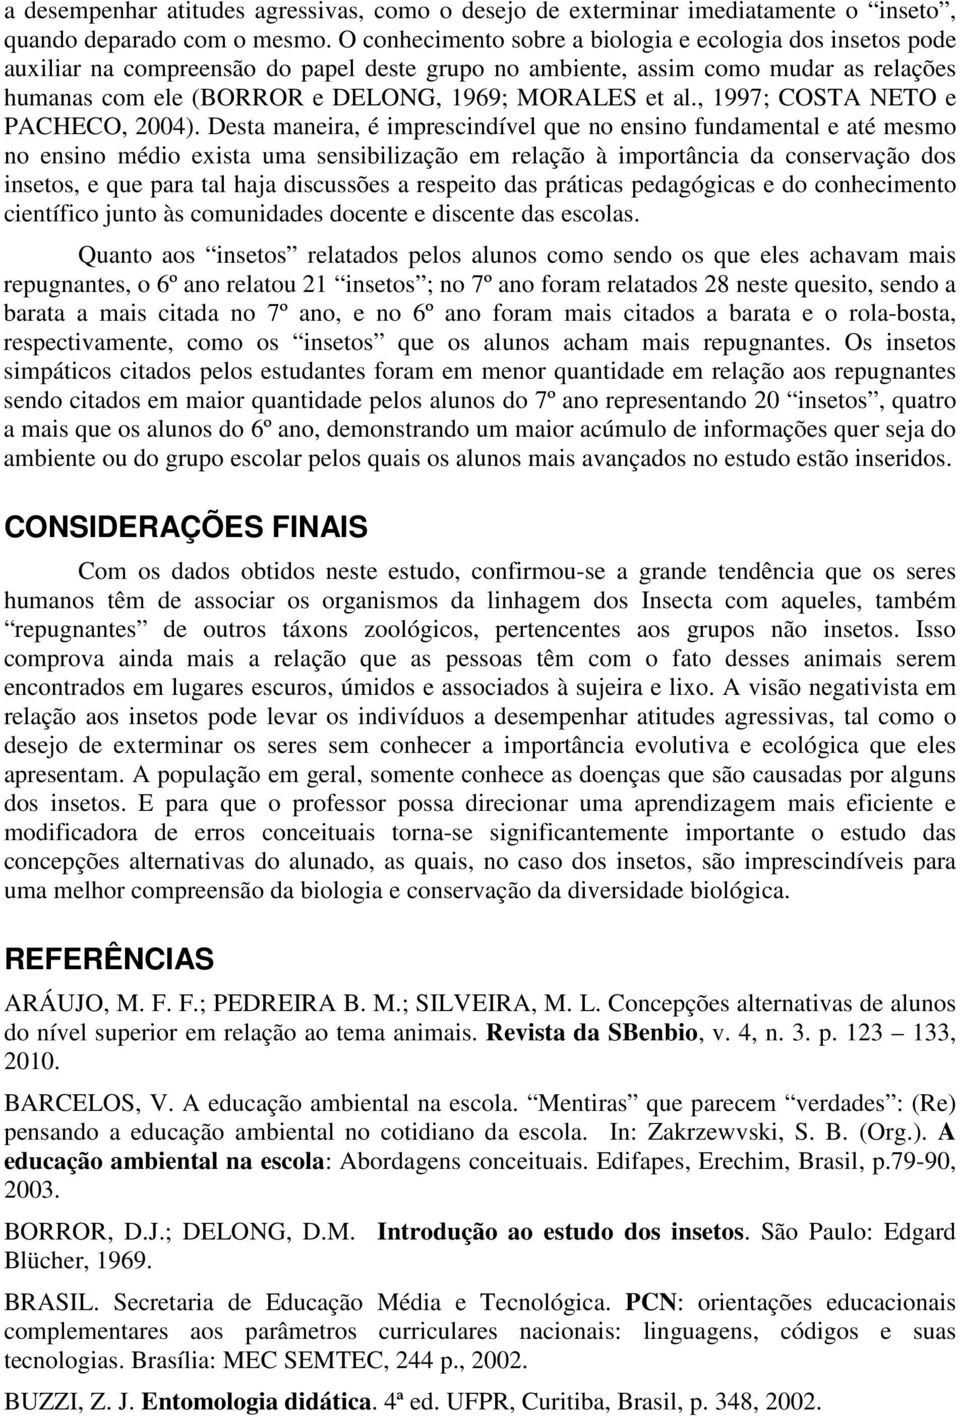 al., 1997; COSTA NETO e PACHECO, 2004).